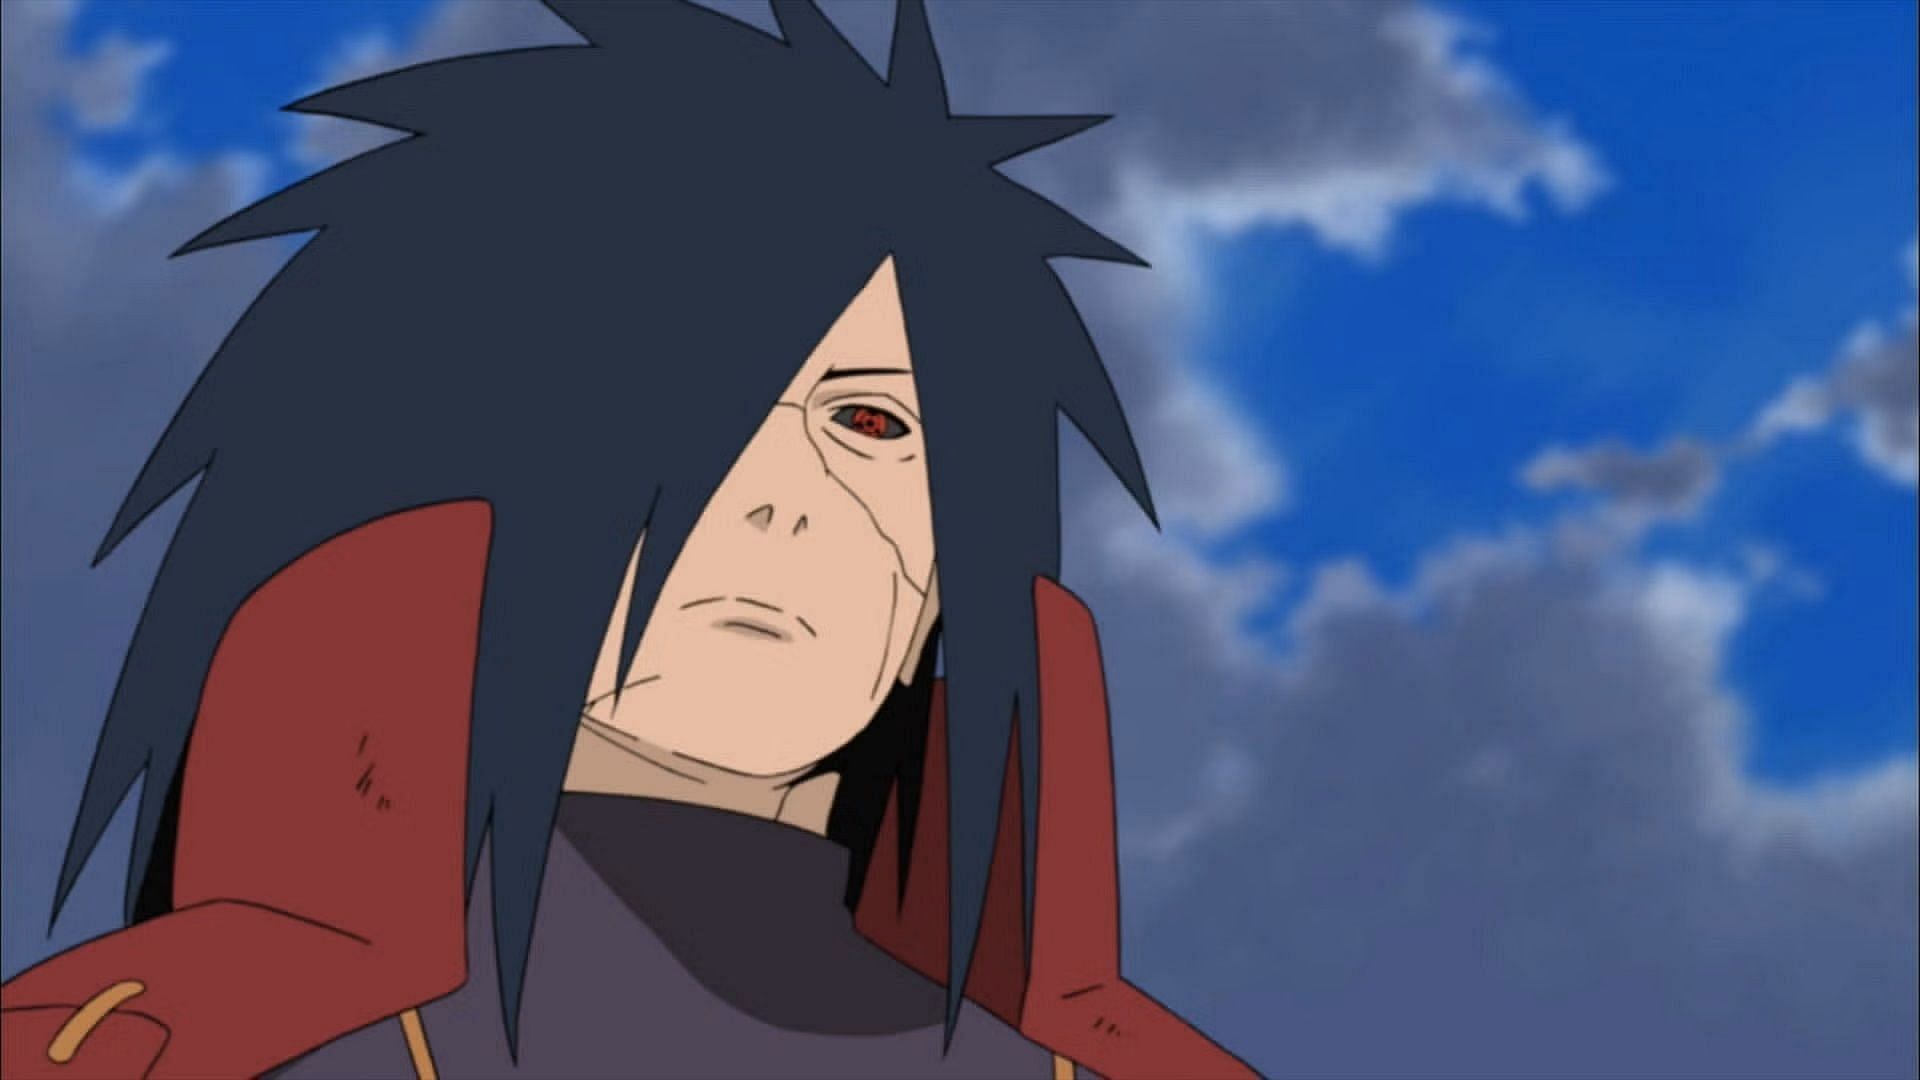 Madara Uchiha as seen in Naruto (Image via Pierrot)